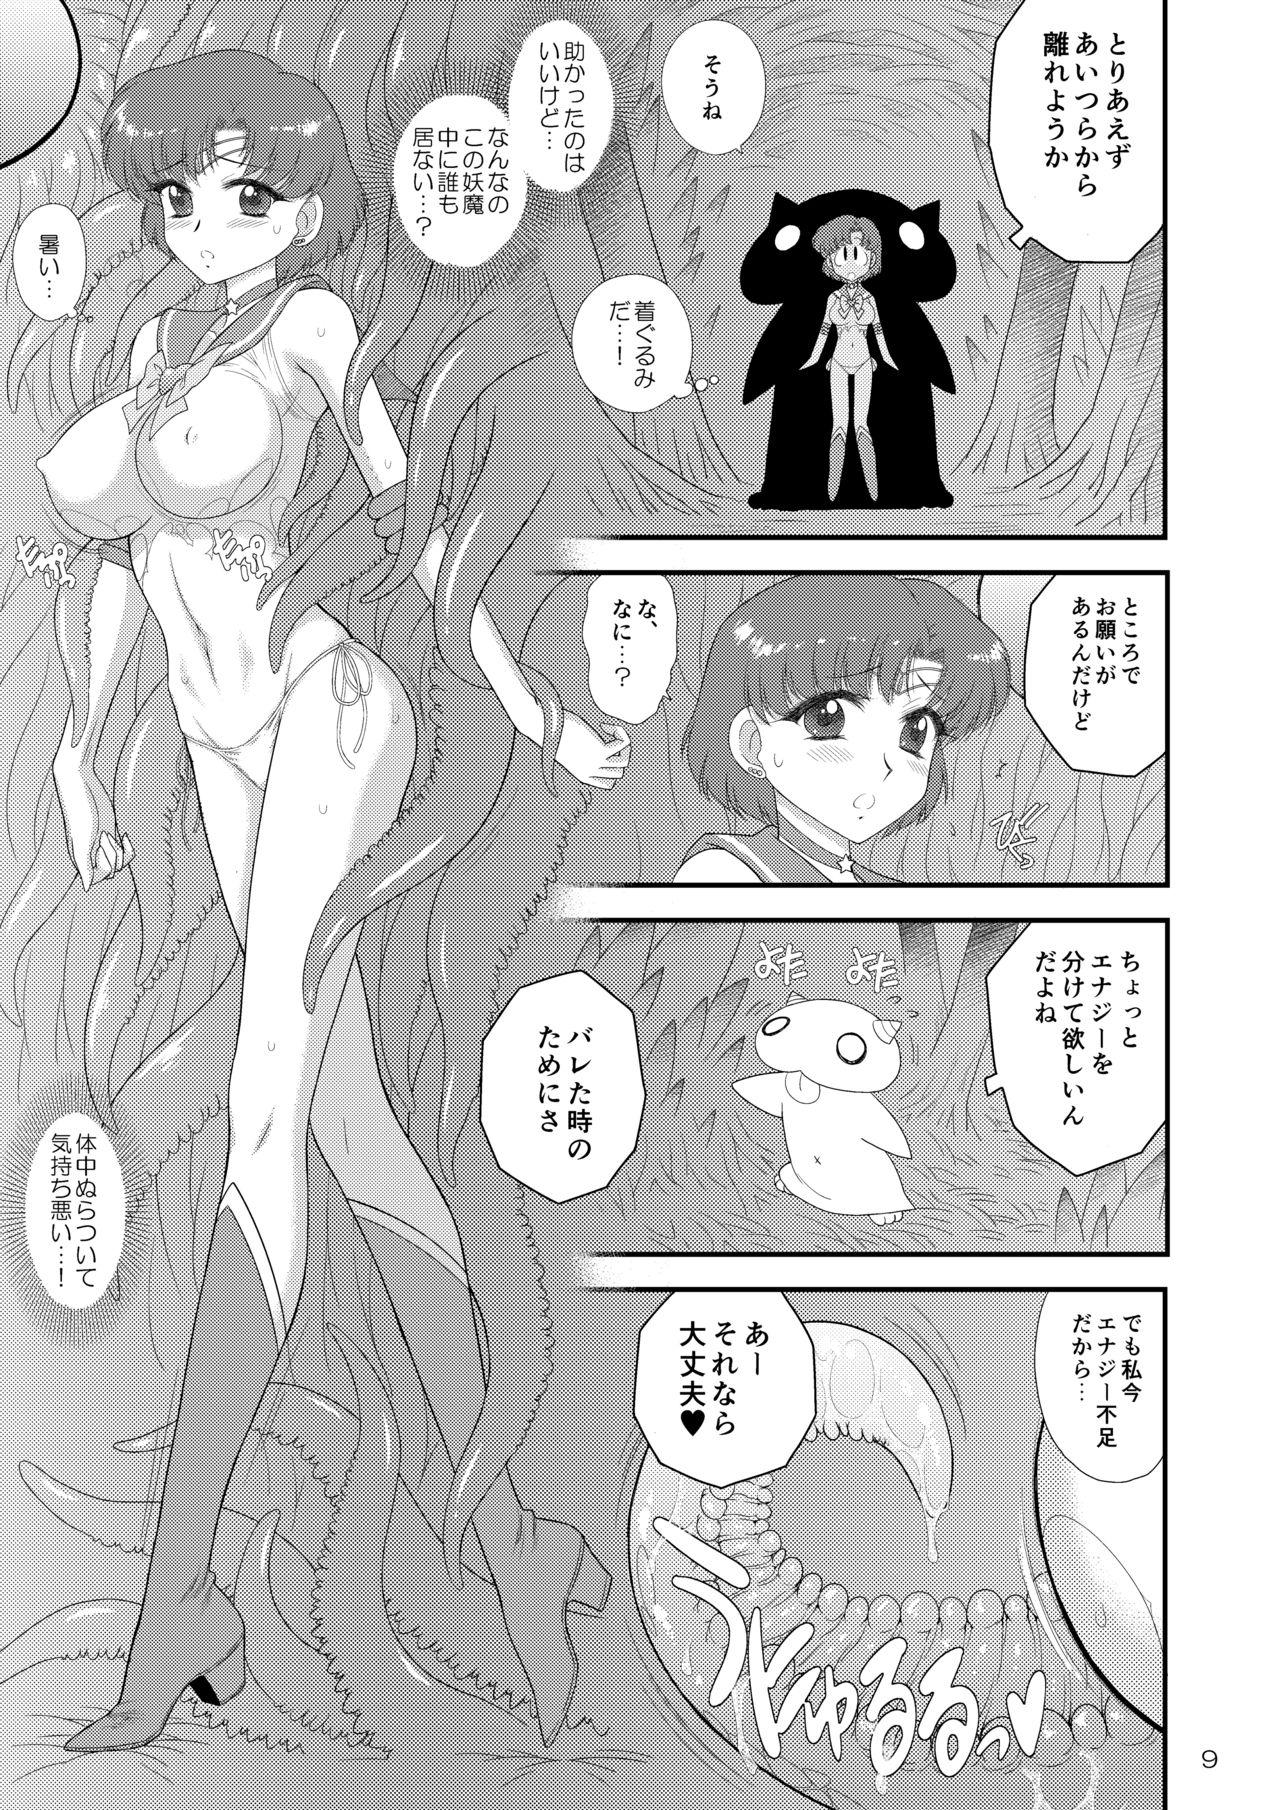 Boots Kigurumi no Naka wa Massakari - Sailor moon Weird - Page 9